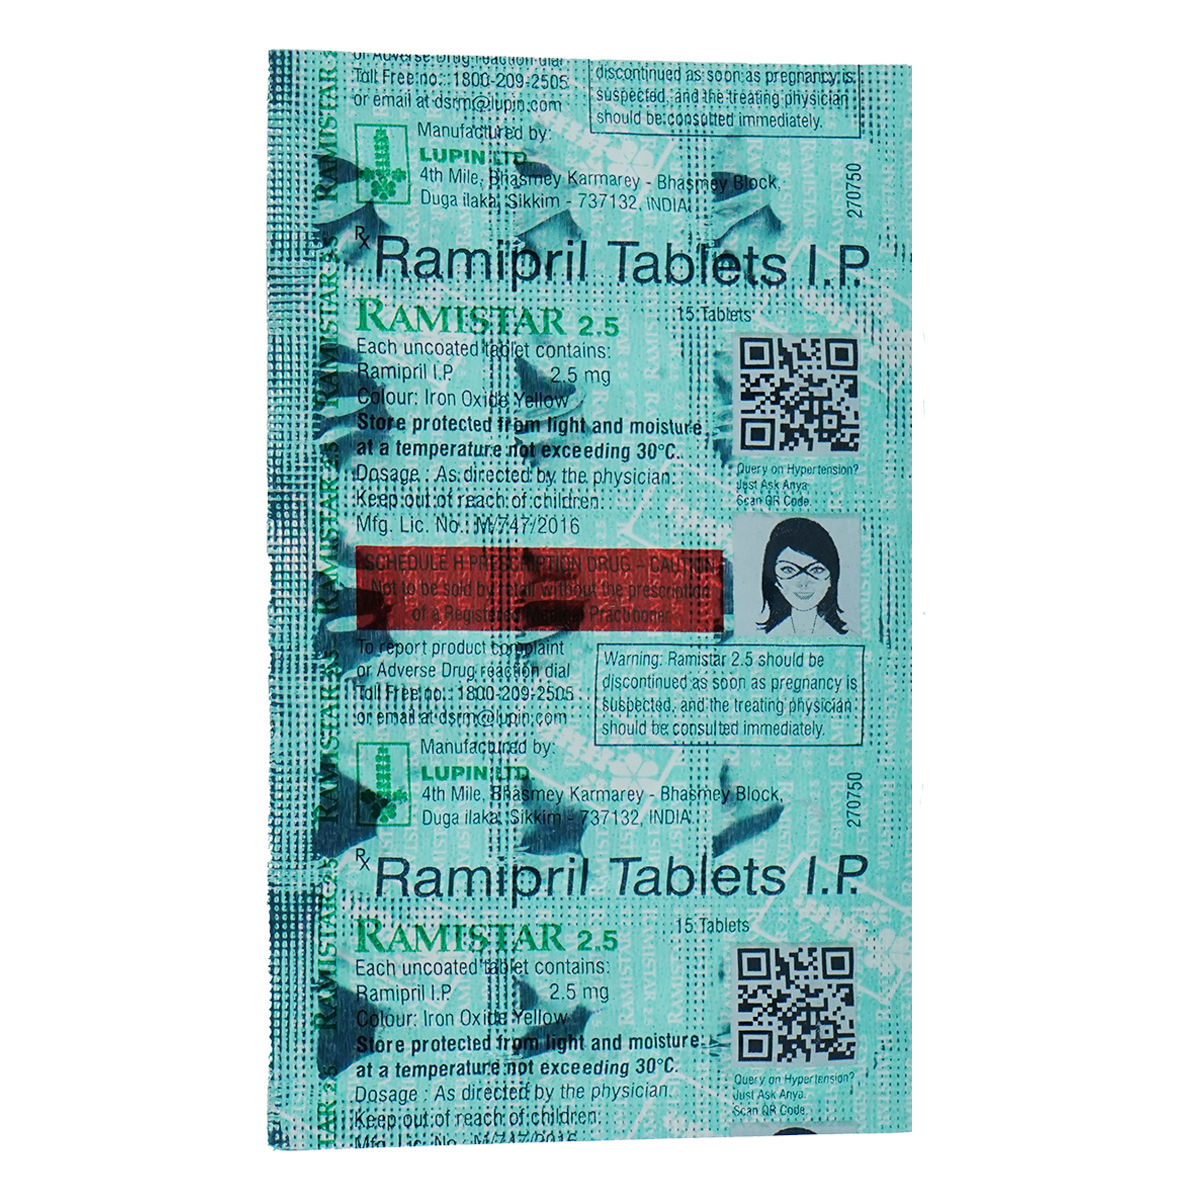 Buy Ramistar 2.5 Tablet 15's Online